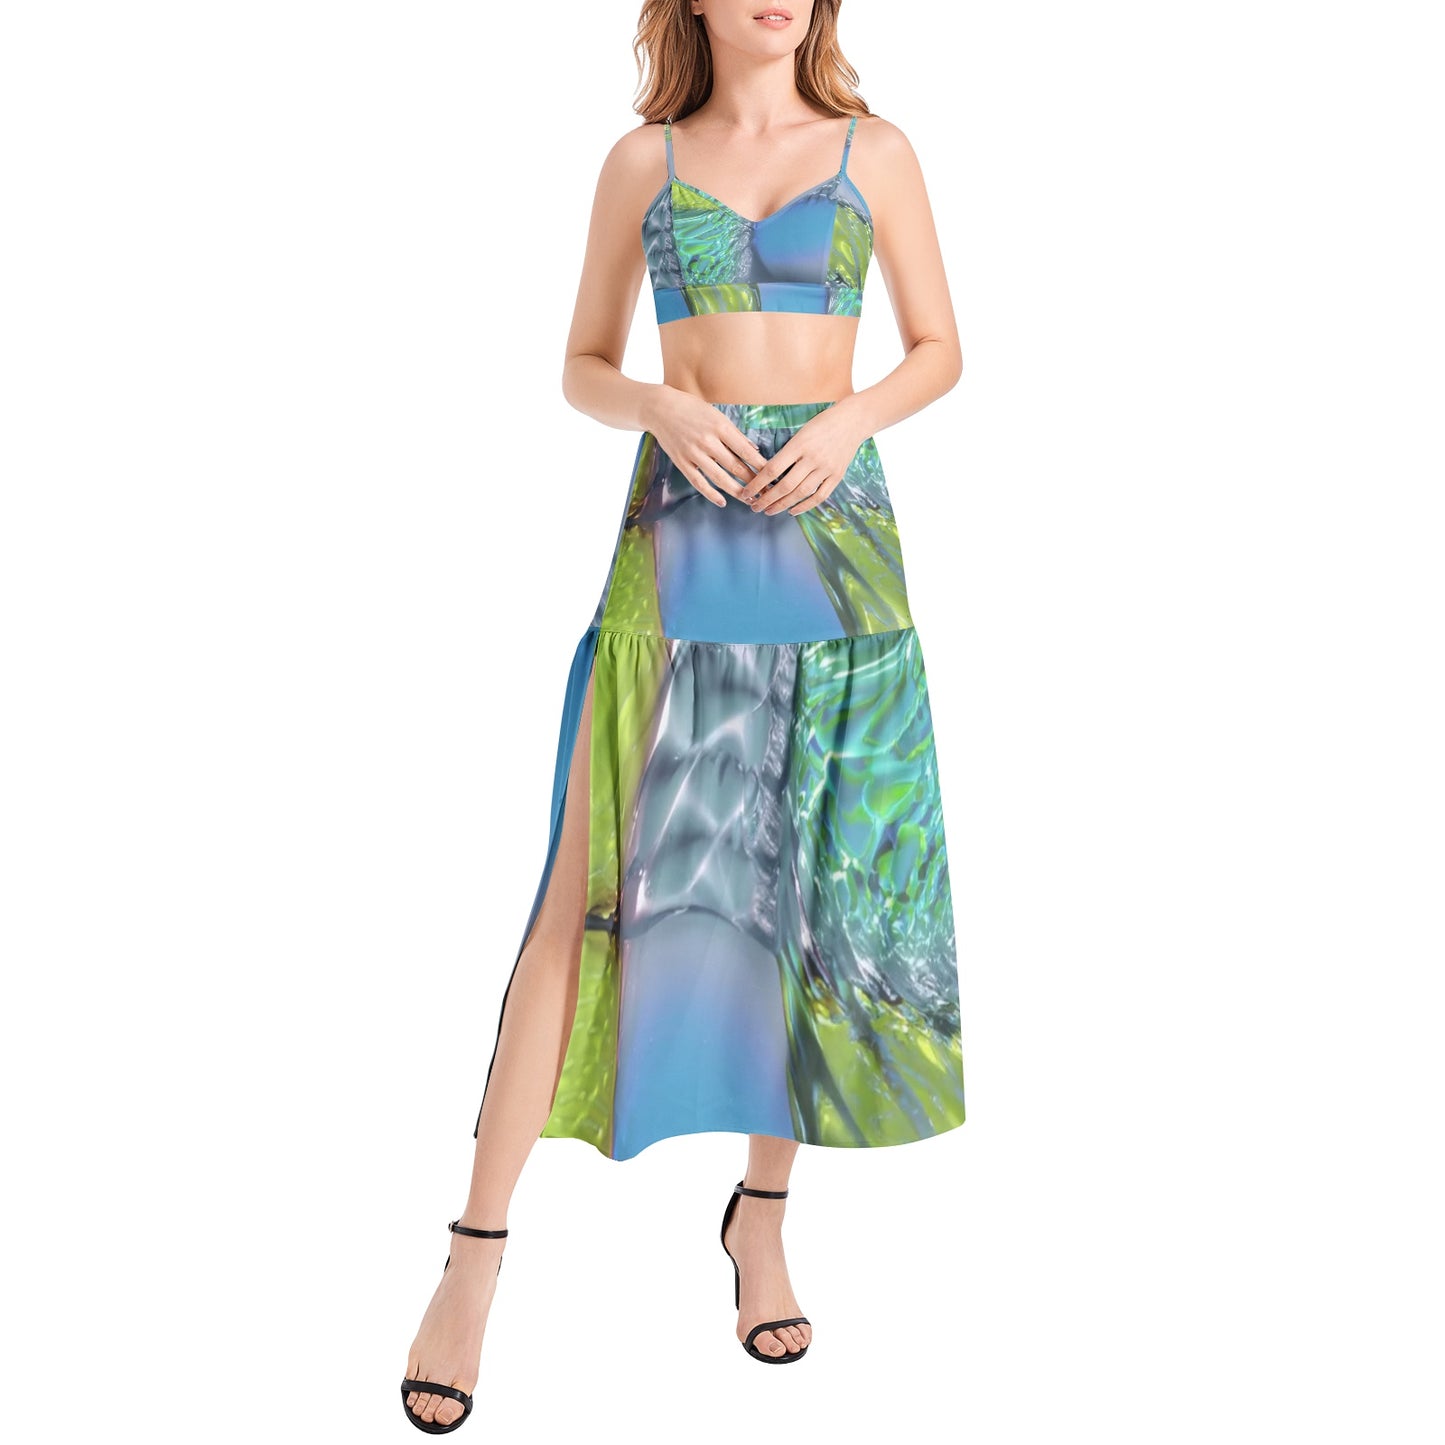 shons wet blue water Bralette Top and High Slit Thigh Skirt Set